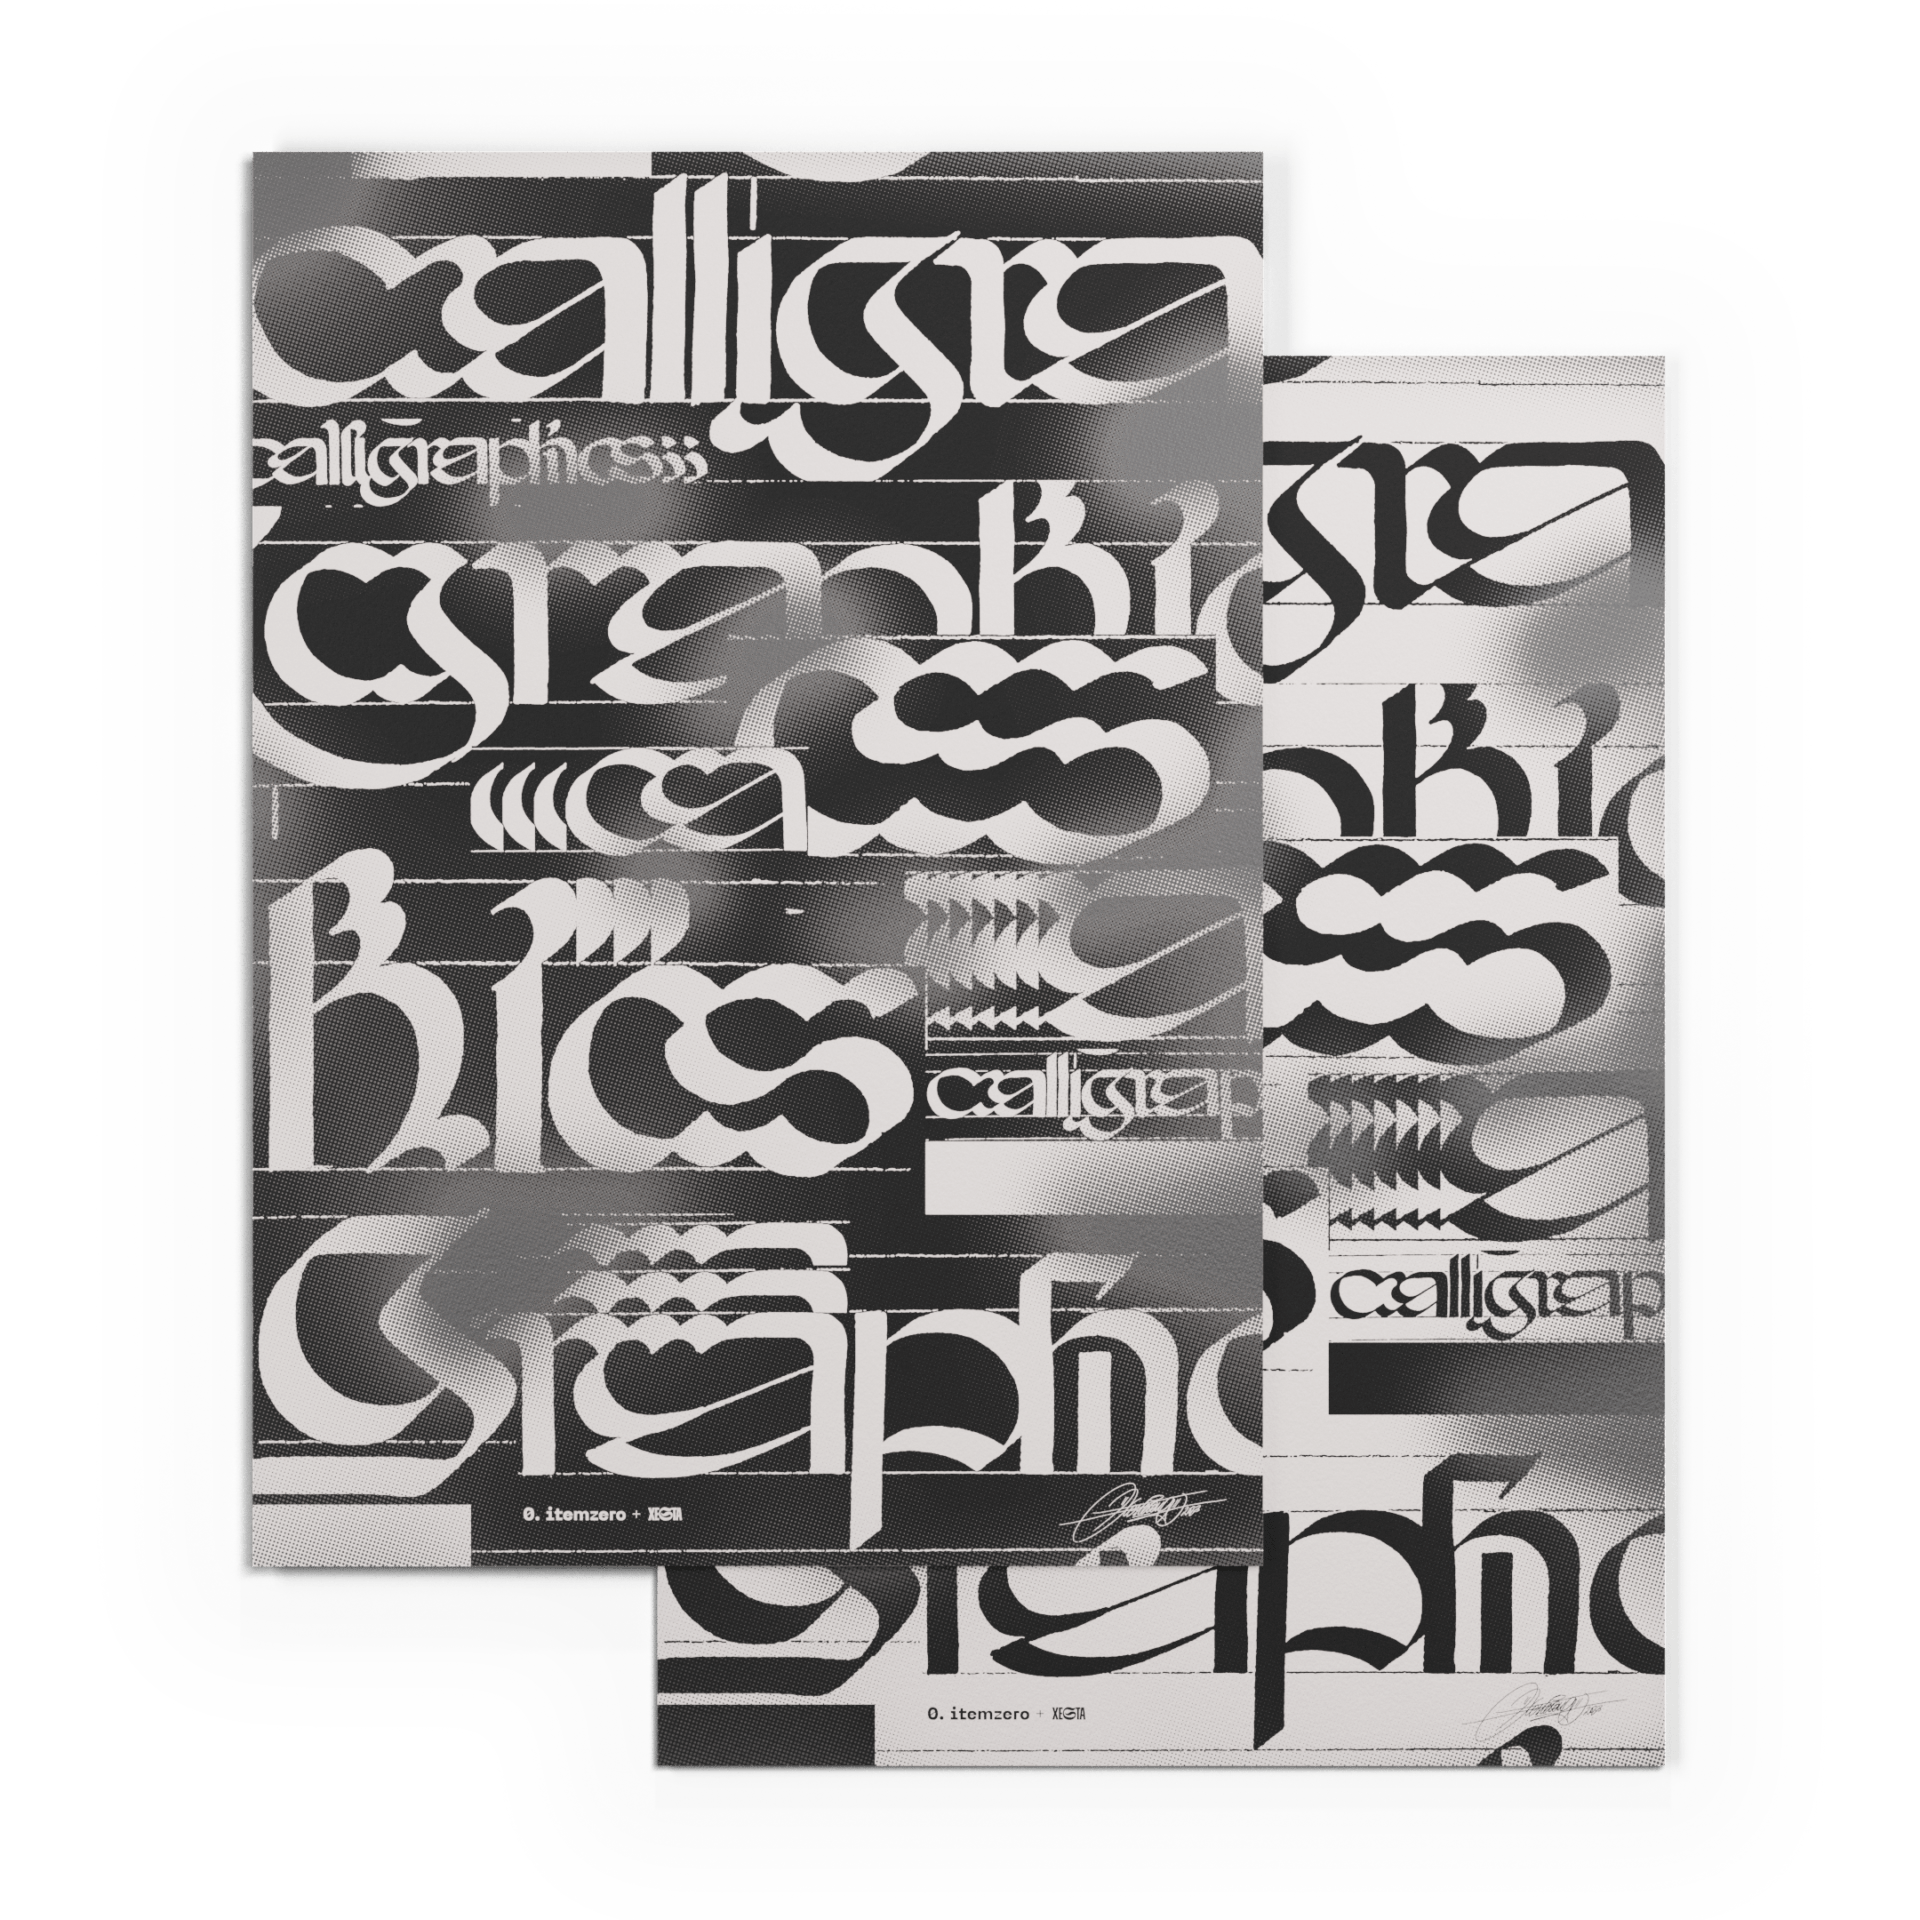 posters transparent - Rotunda Calligraphy practice sheets - Shop → 0. itemzero